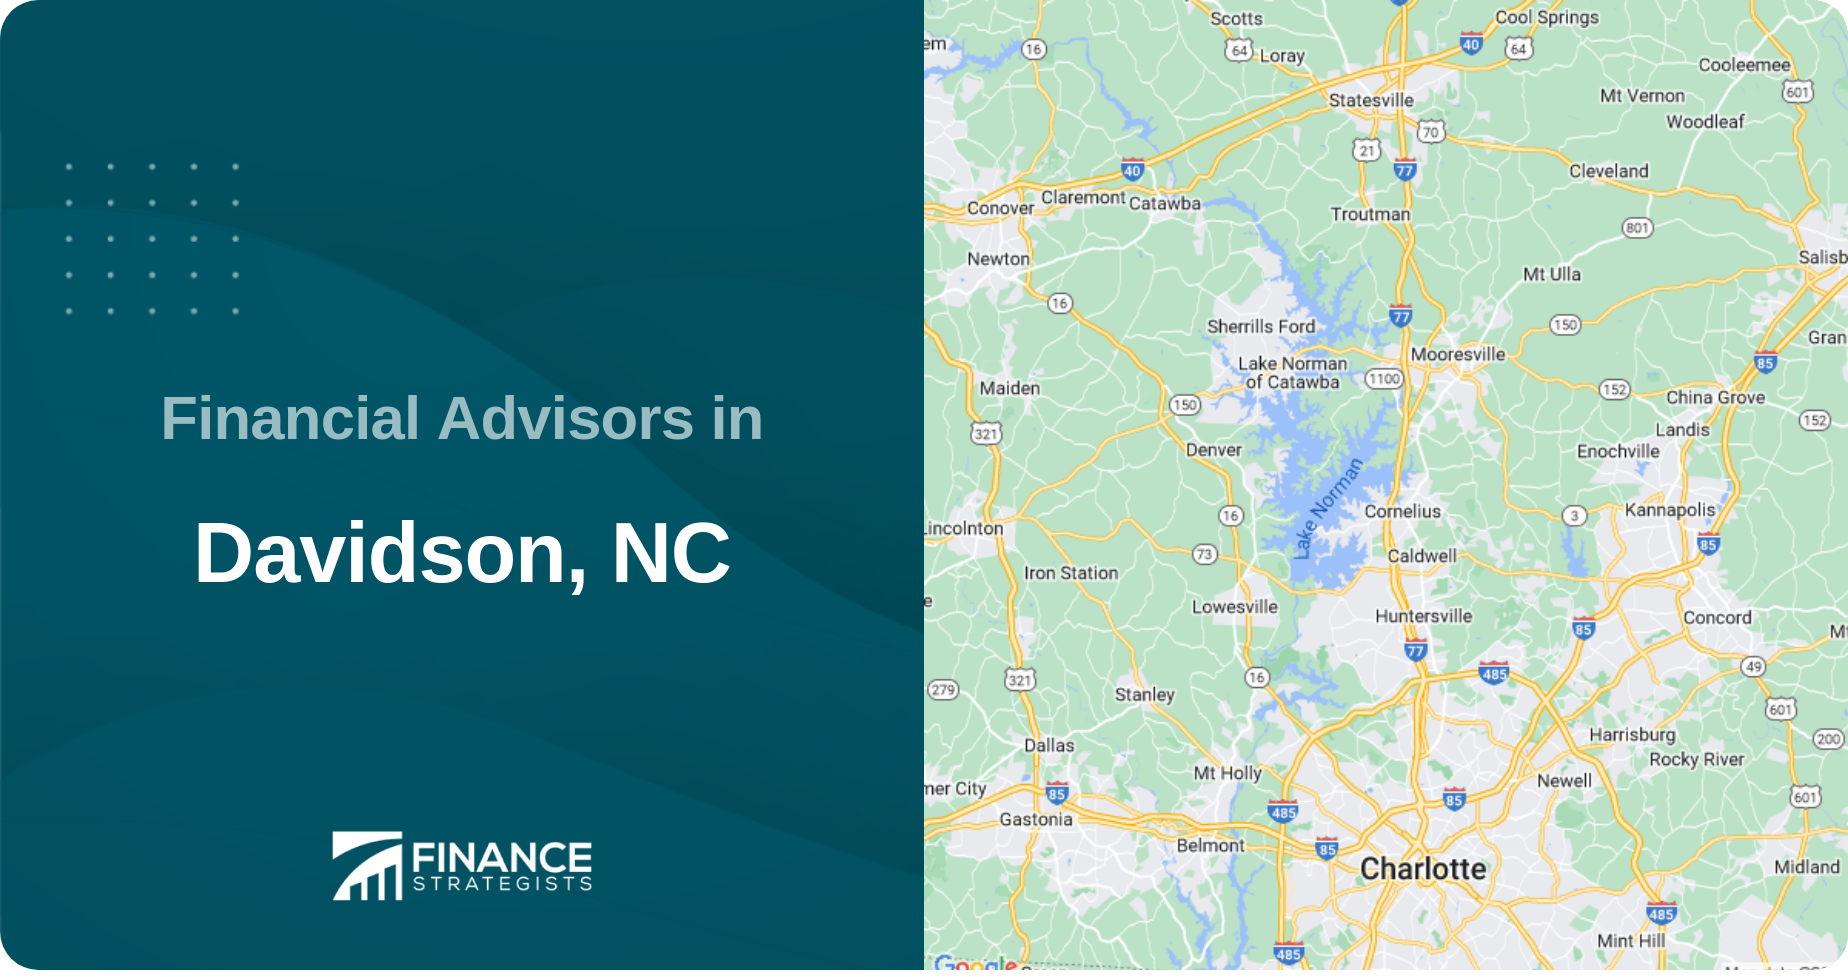 Financial Advisors in Davidson, NC